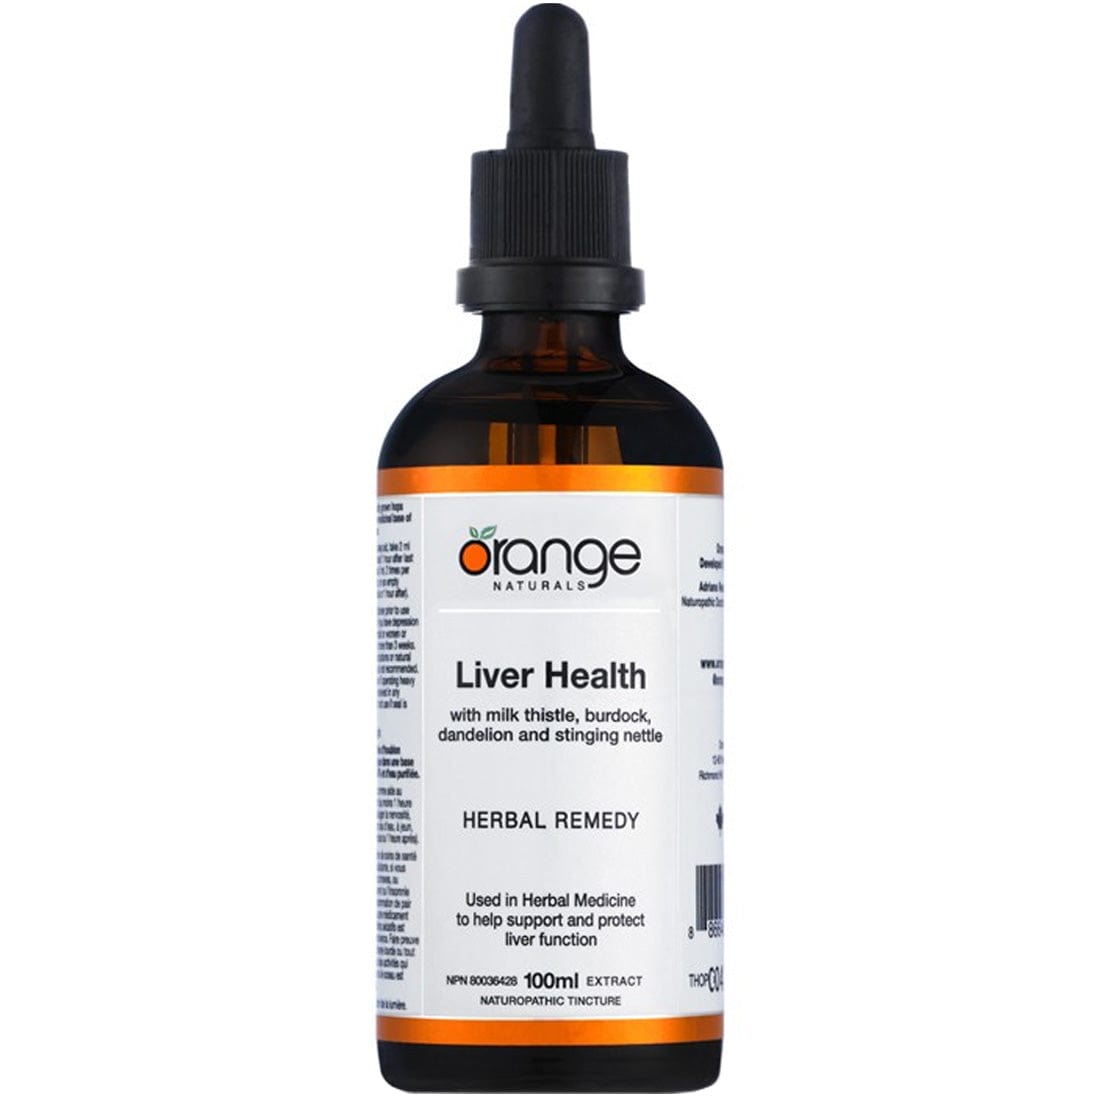 Orange Naturals Liver Health, 100ml Tincture